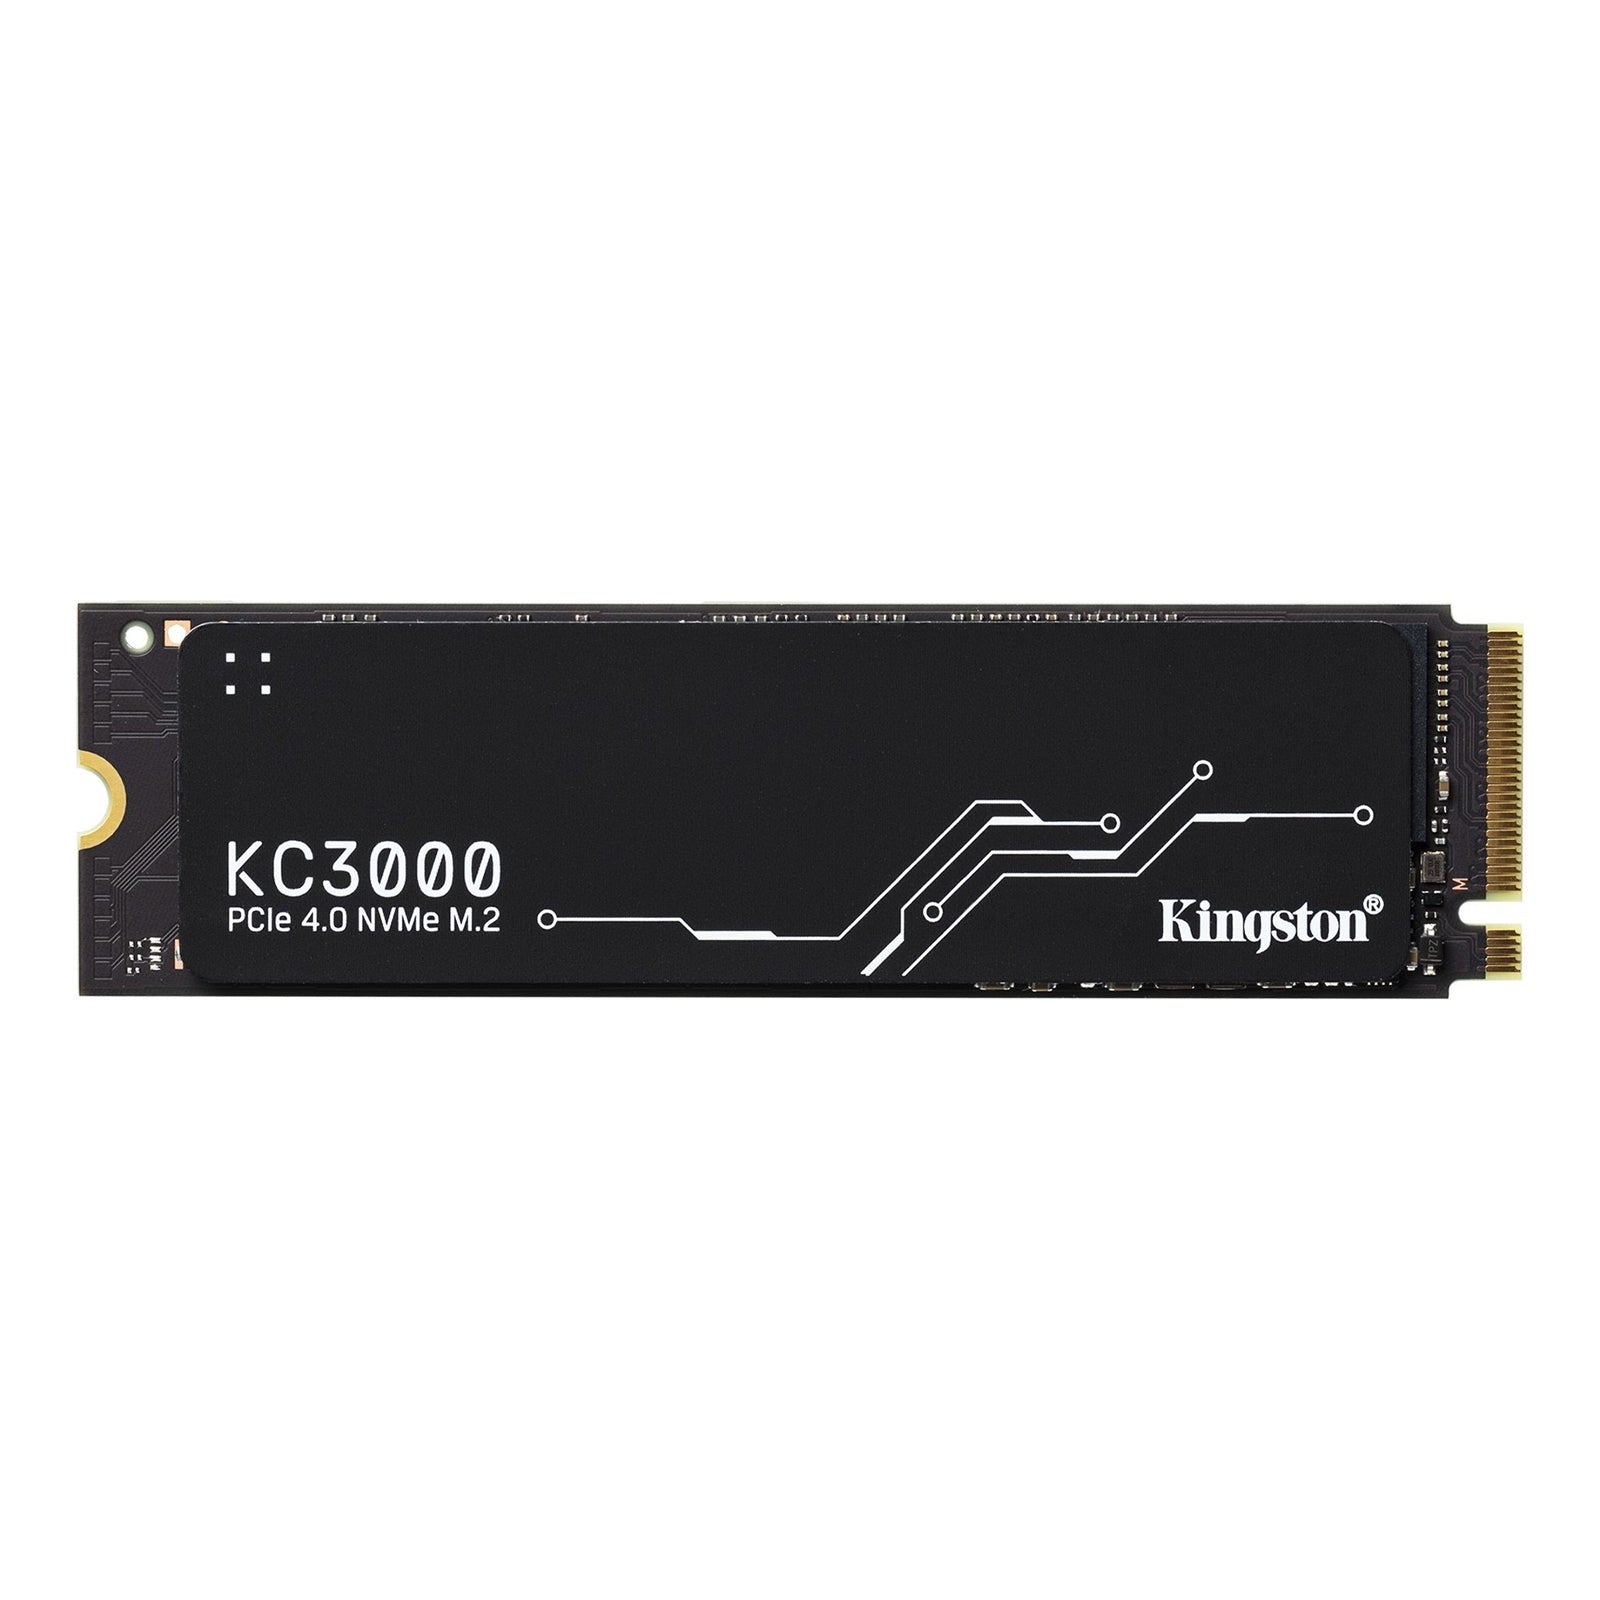 Kingston KC3000 1TB NVMe M.2 PCIe Gen4 SSD - High-Speed, High-Performance Storage